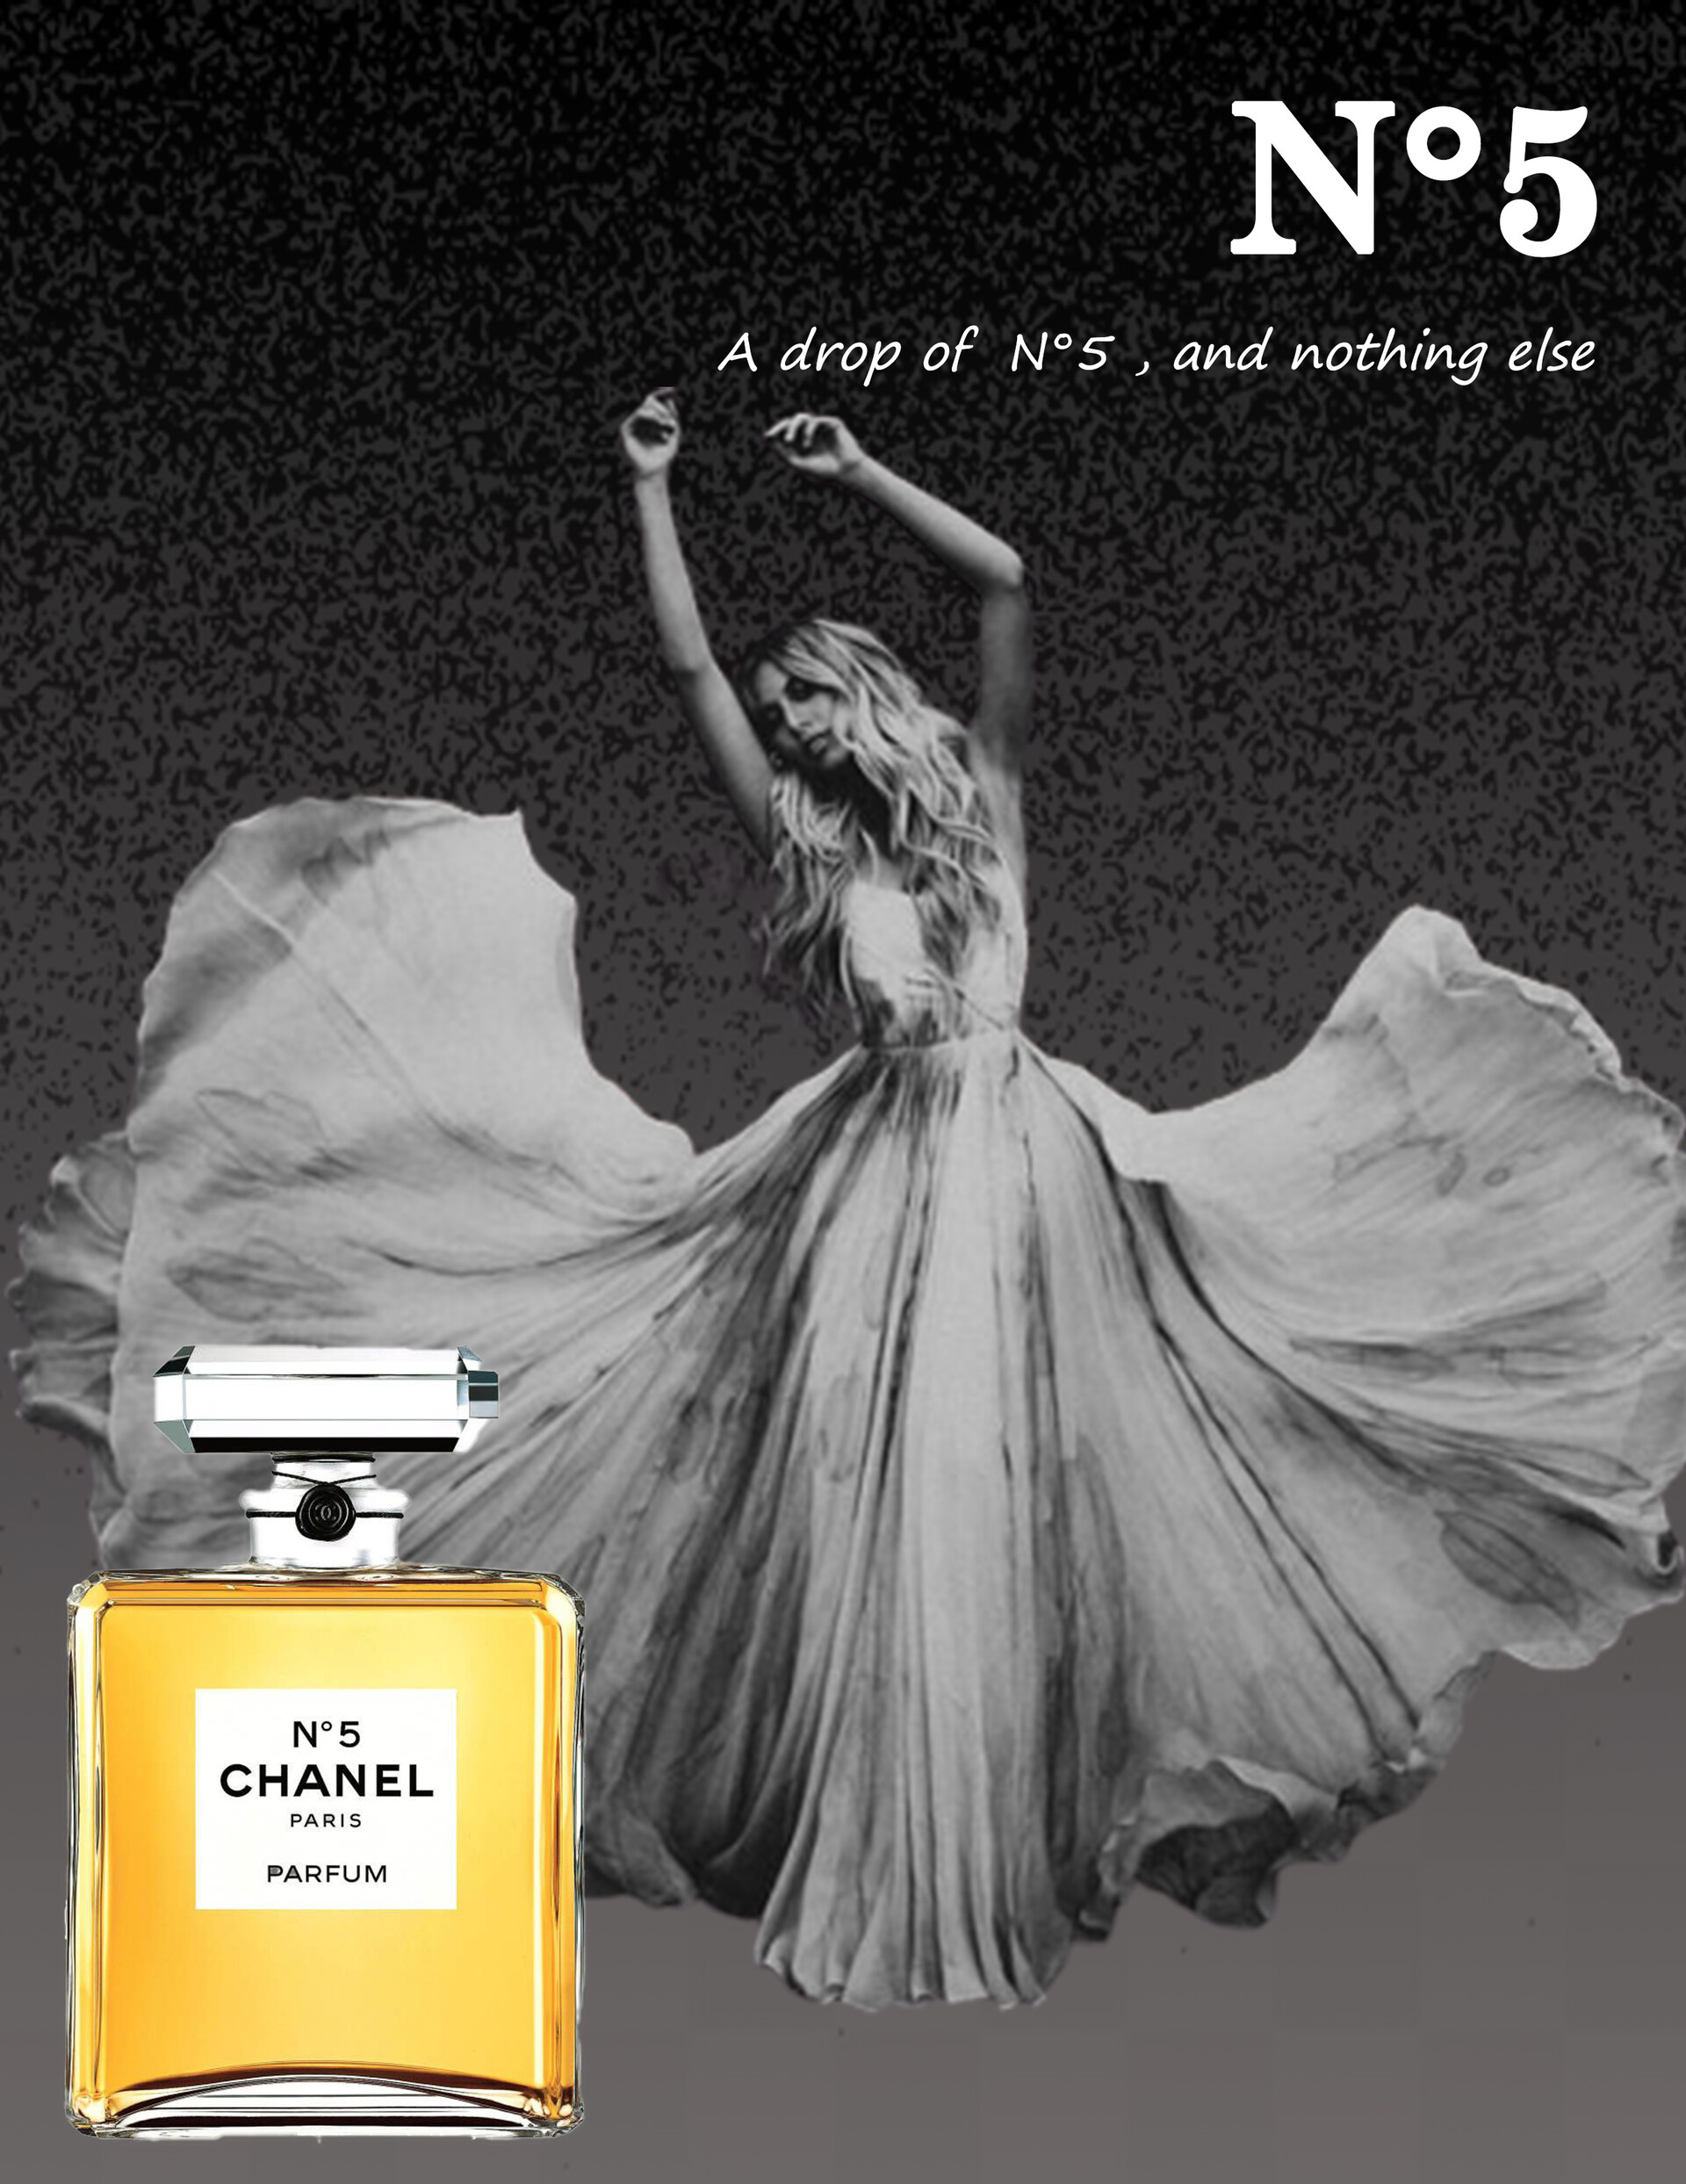 ArtStation - Chanel N5 poster